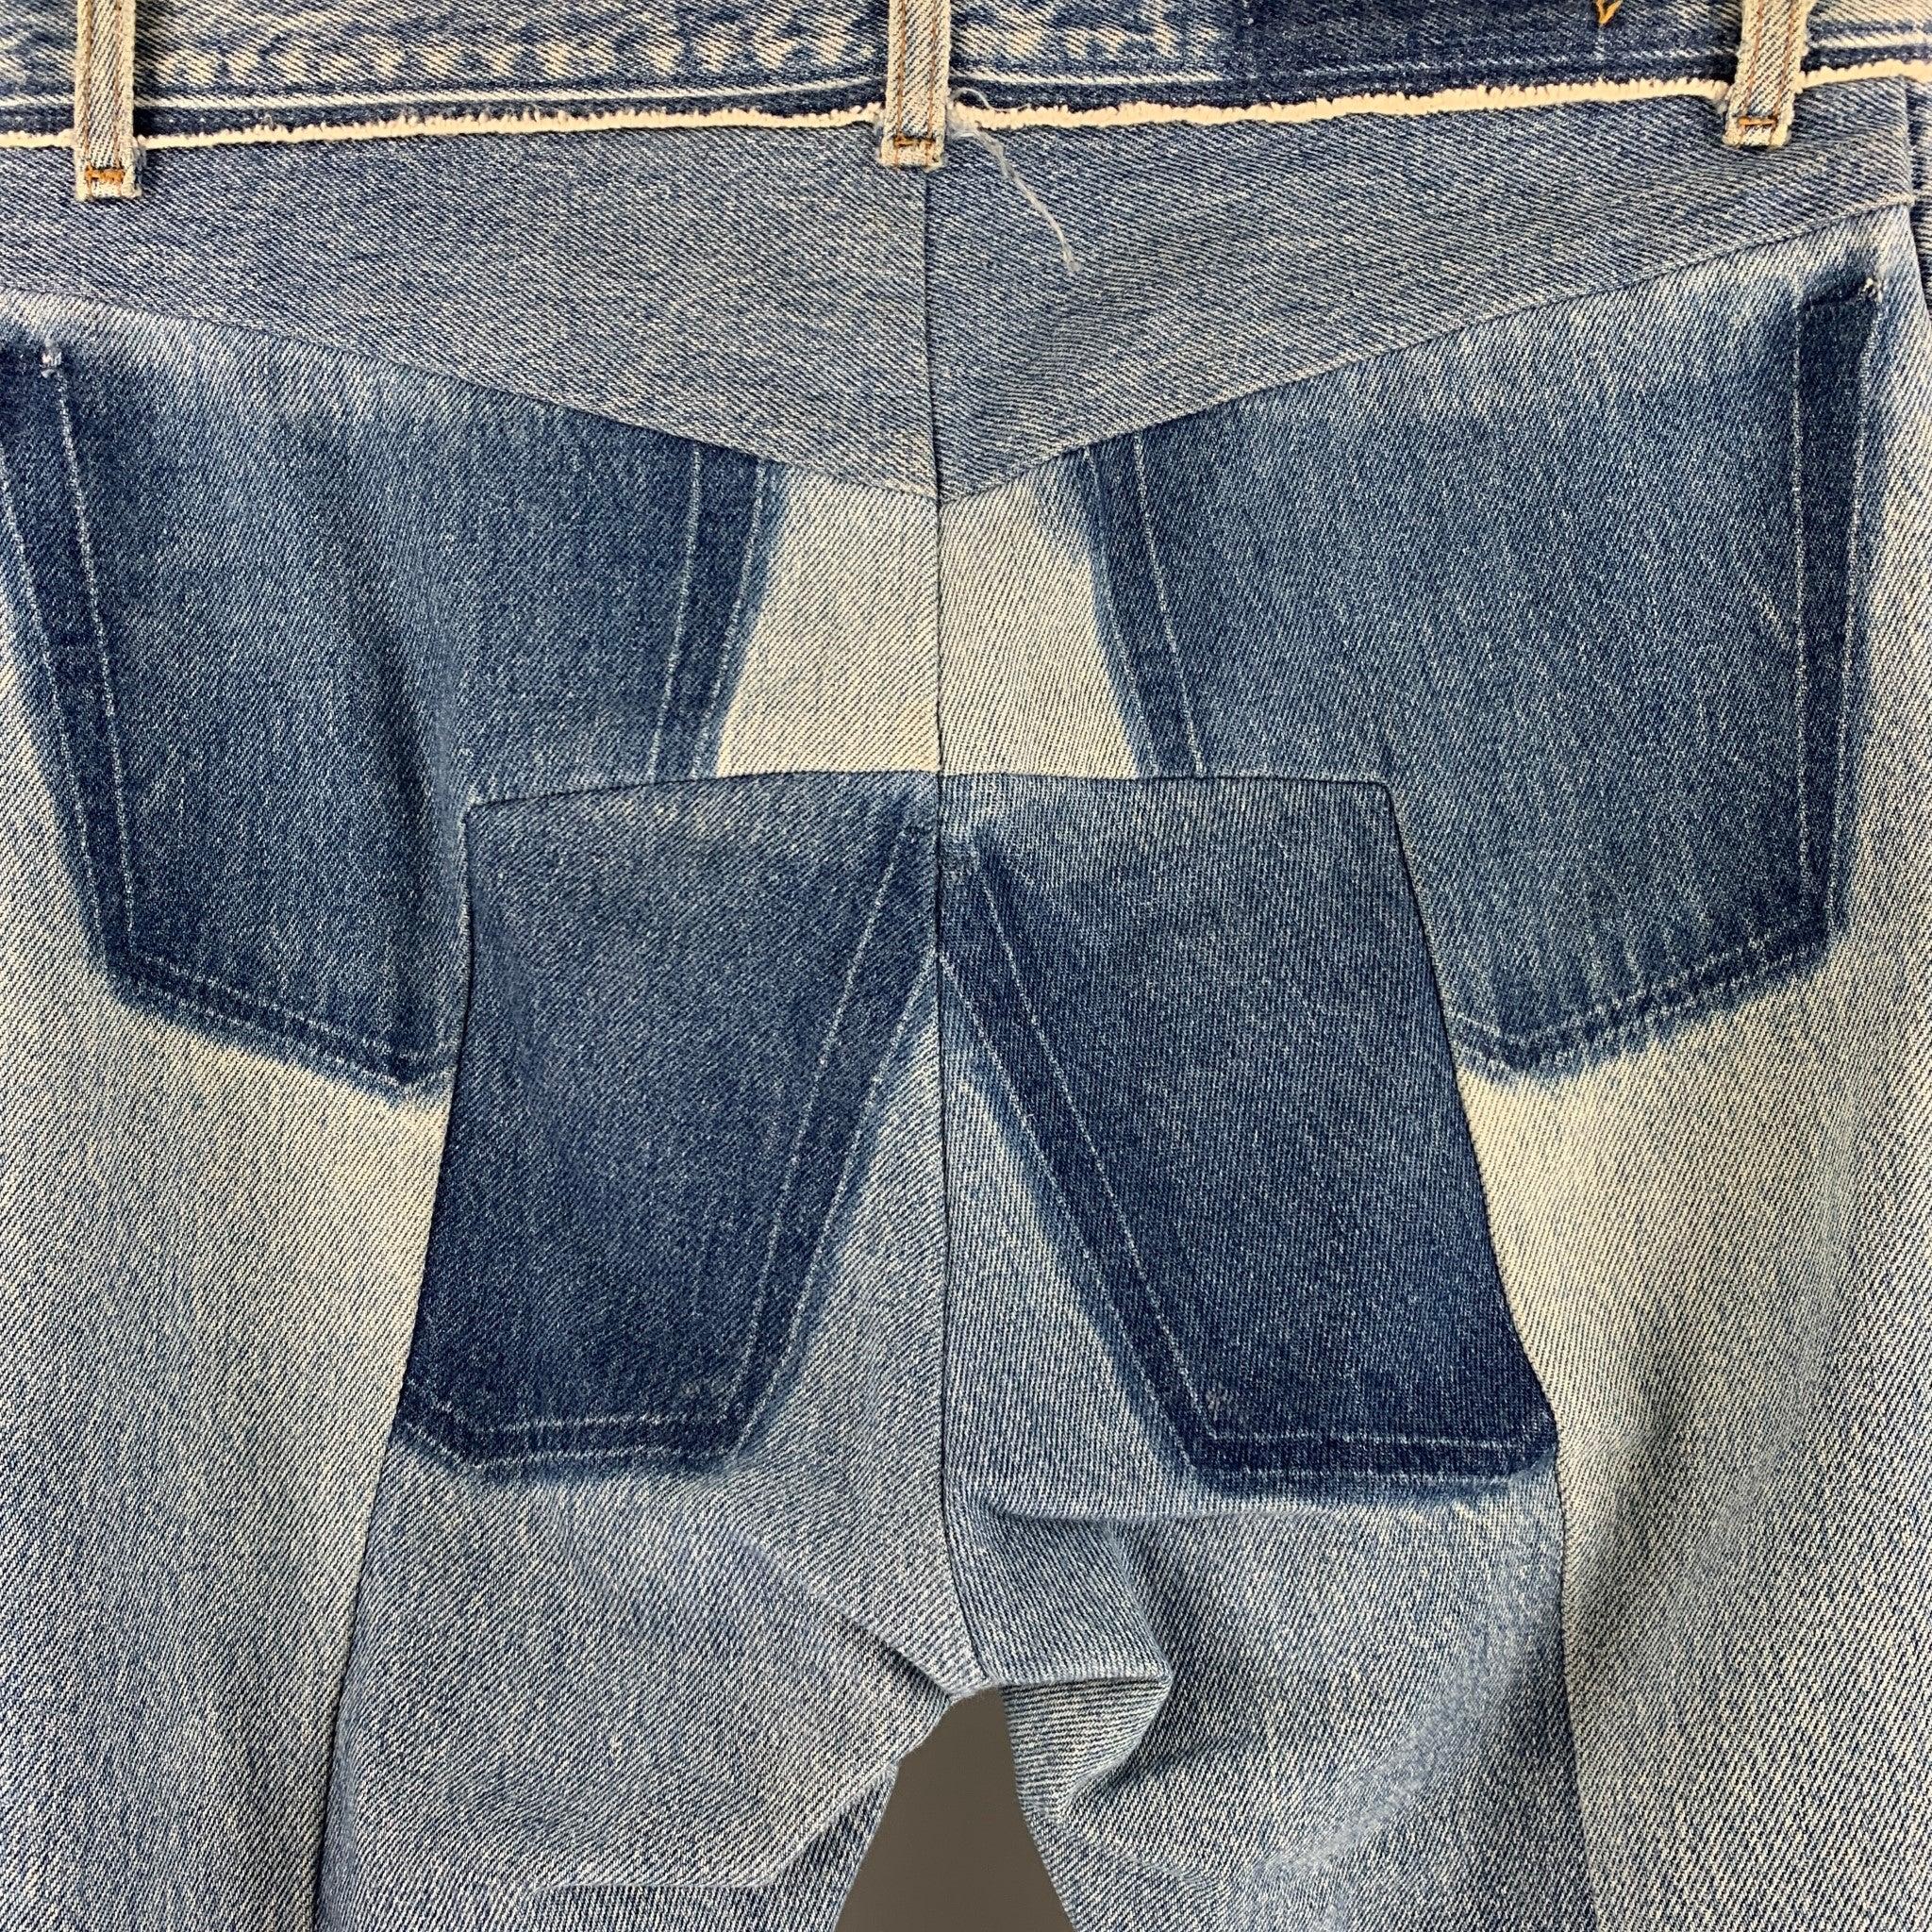 Men's VETEMENTS Size 30 Blue Distressed Cotton Button Fly Jeans For Sale